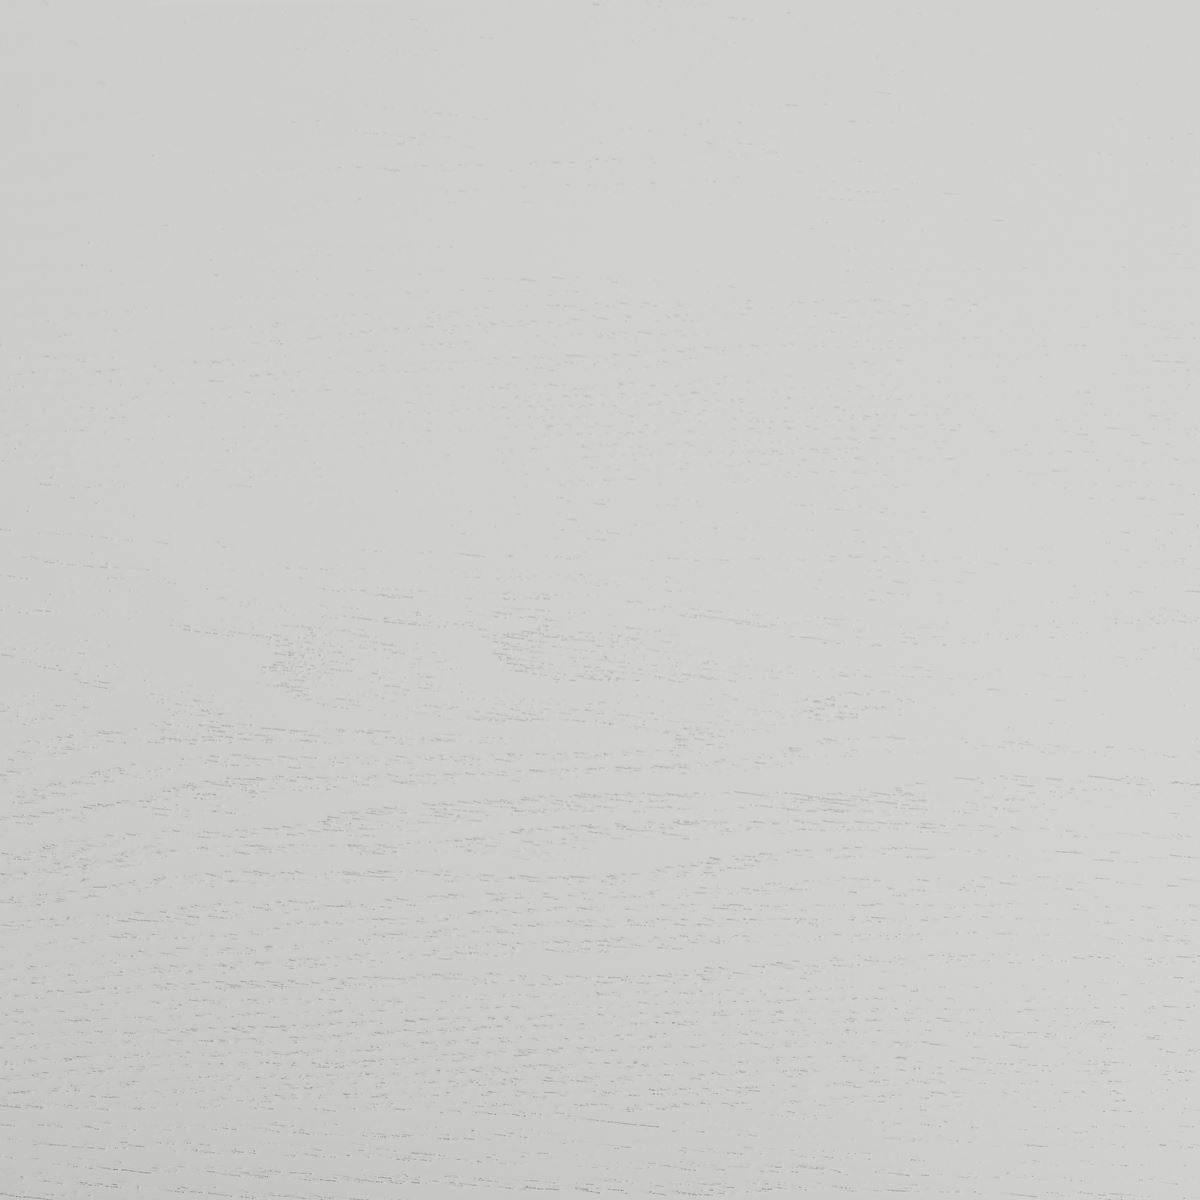 KUUM Stool shikaku - Gray White Steel Frame/Colored Wooden Seat / クーム  スツール シカク